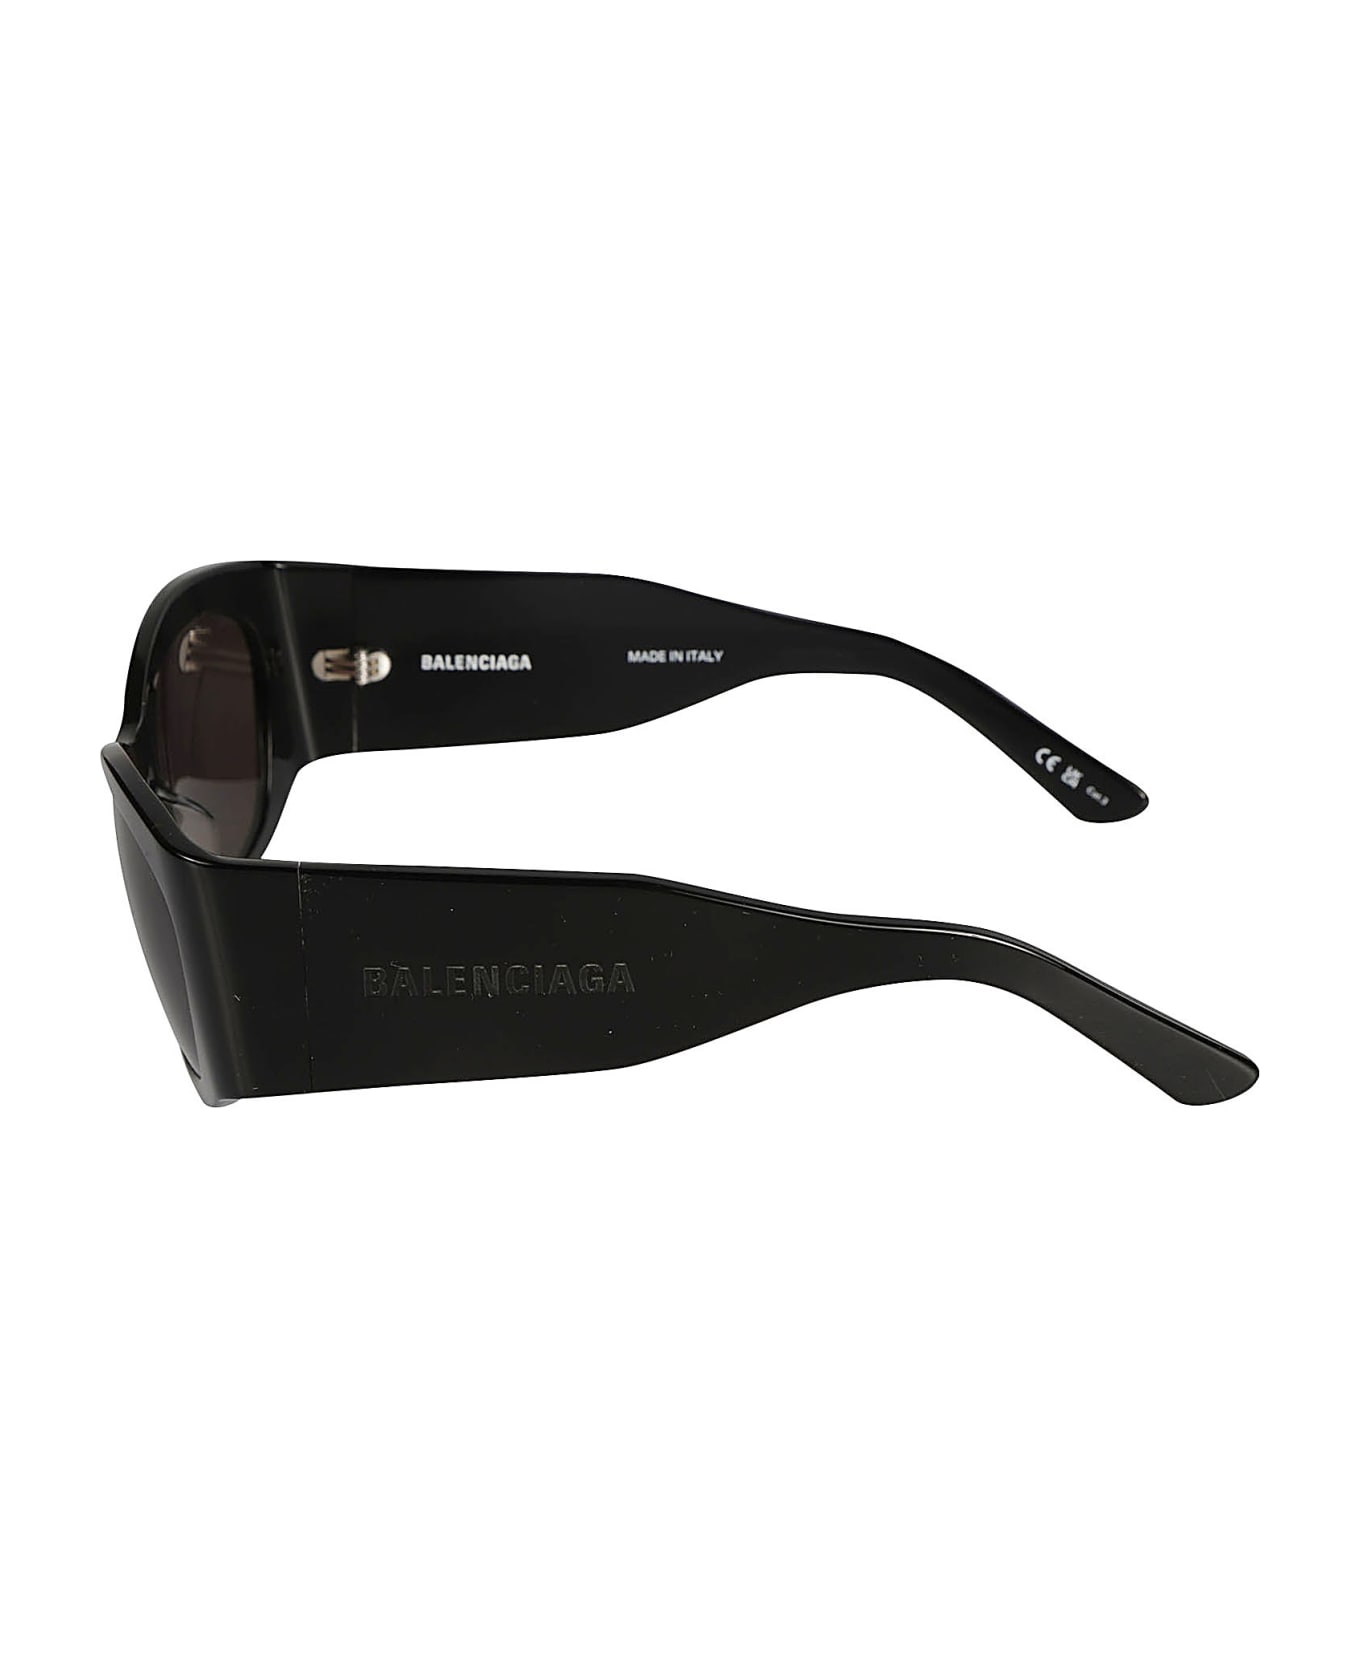 Balenciaga Eyewear Flat Temple Logo Sided Sunglasses - Nero/Grigio サングラス